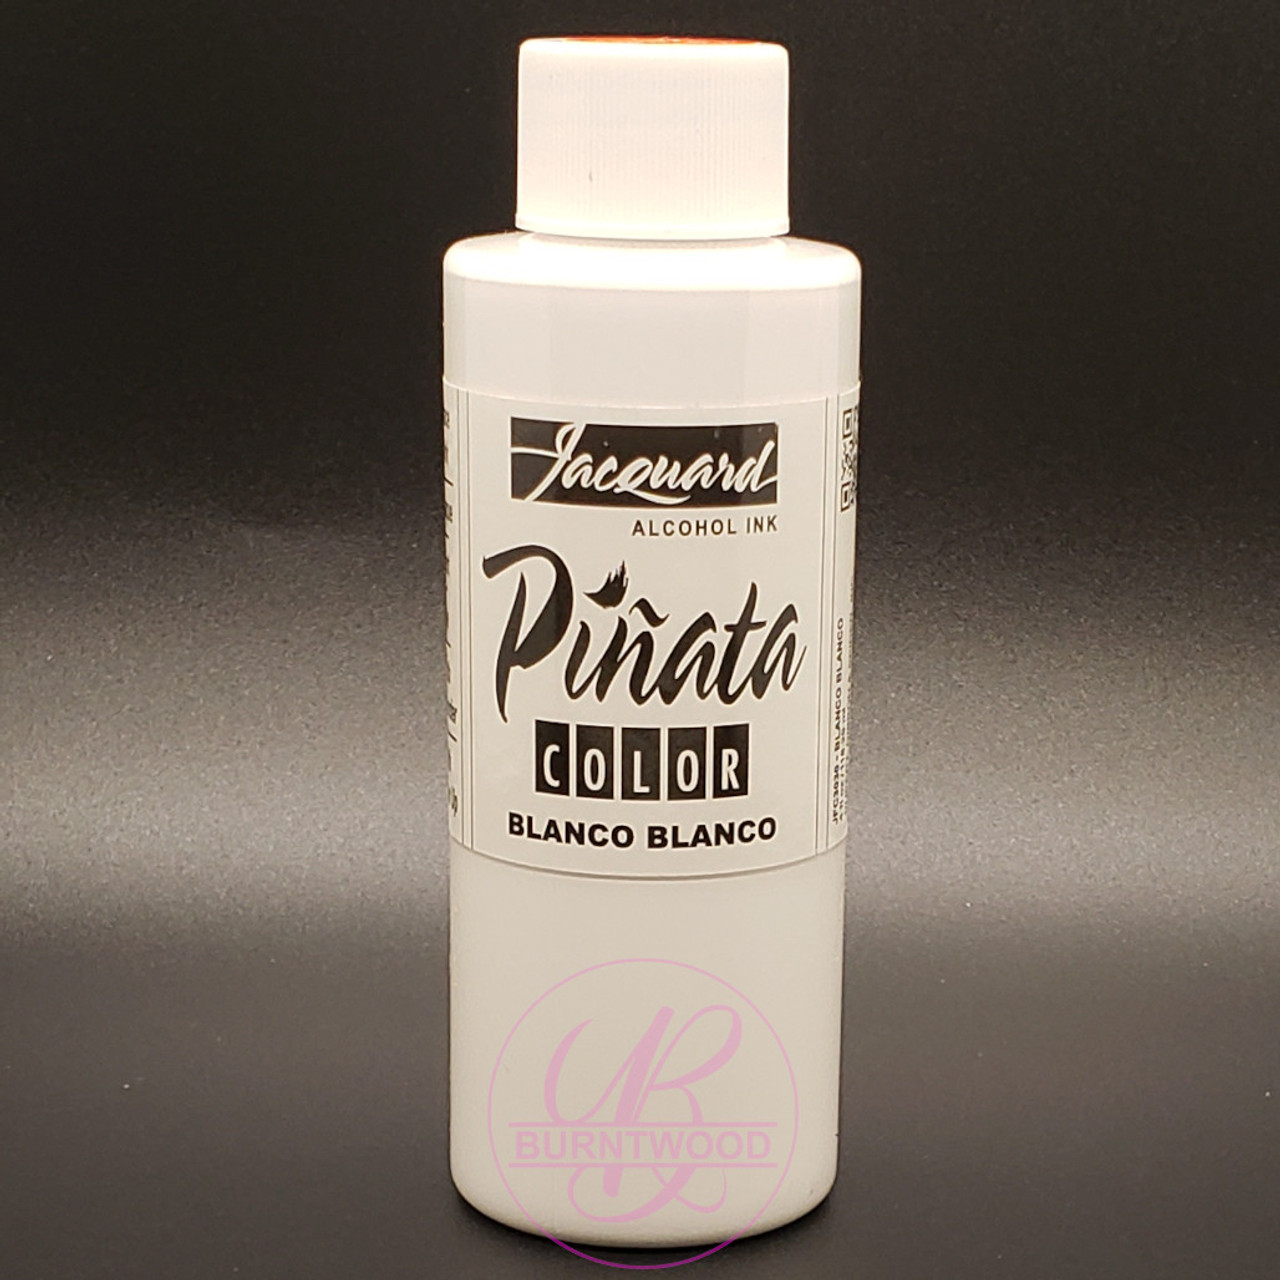 Jacquard - Pinata Alcohol Ink - Blanco Blanco